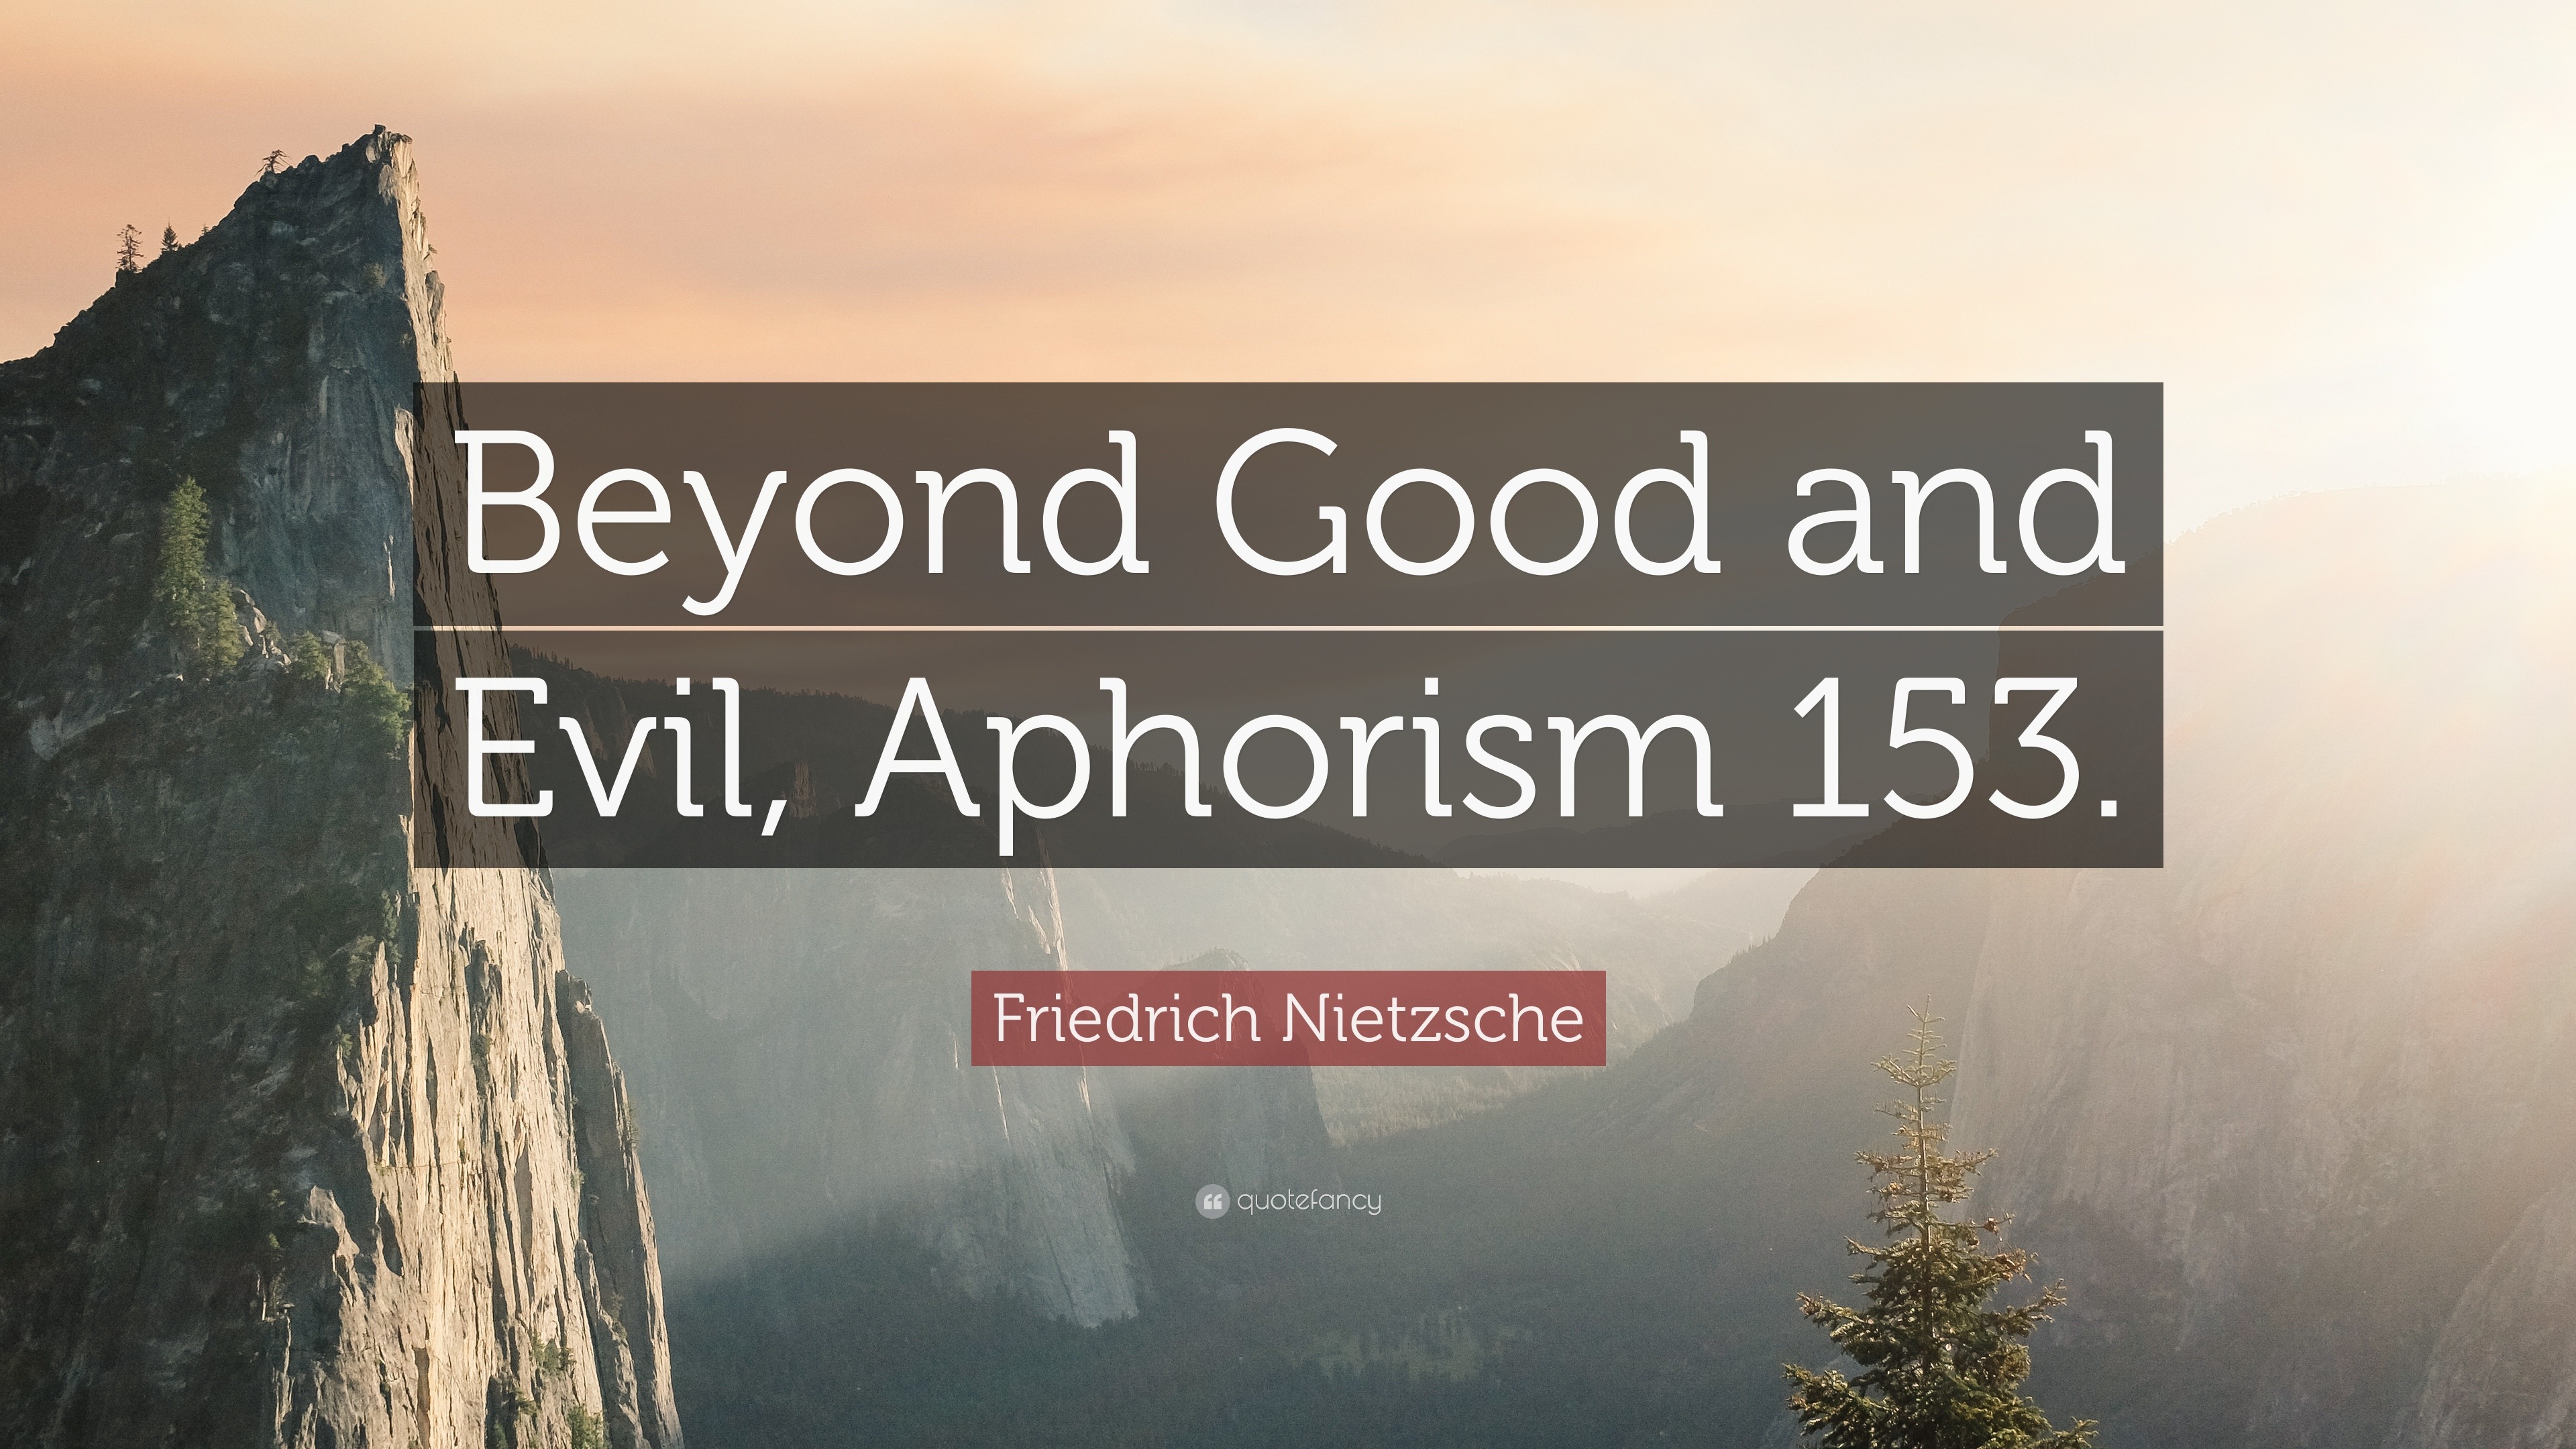 Friedrich Nietzsche Quote “Beyond Good and Evil, Aphorism 153.”